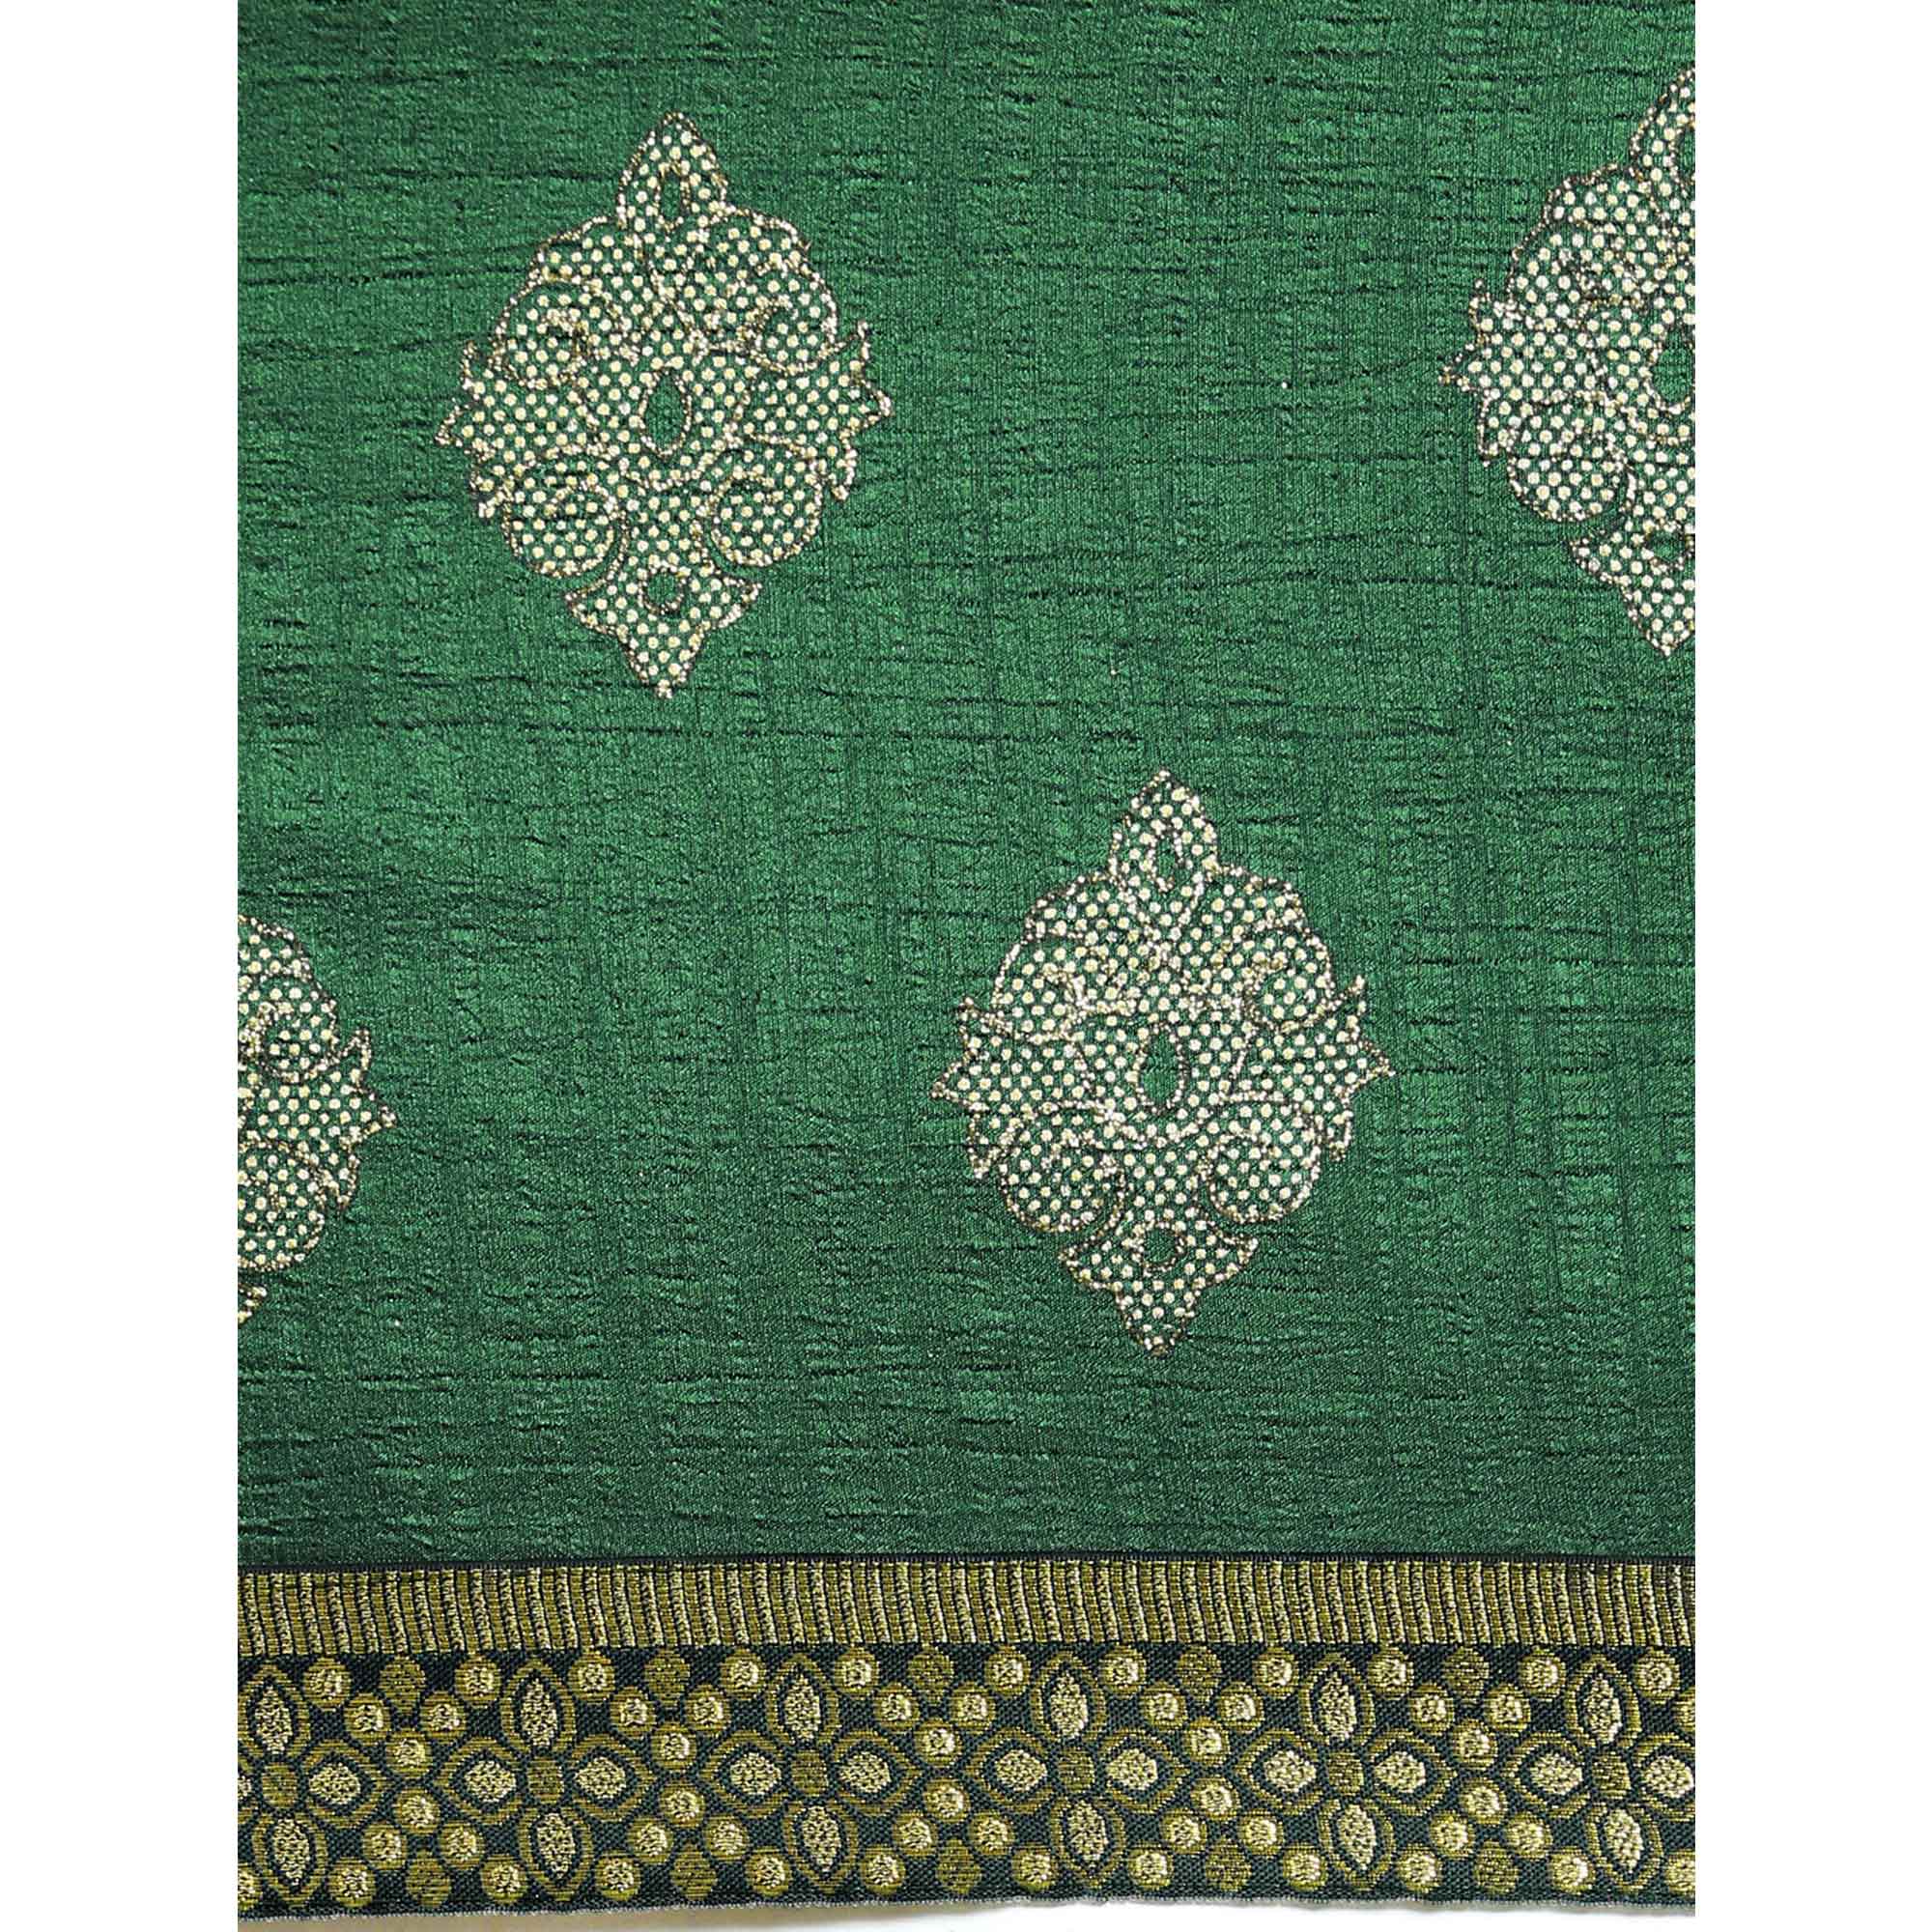 Green Floral Foil Printed Vichitra Silk Saree